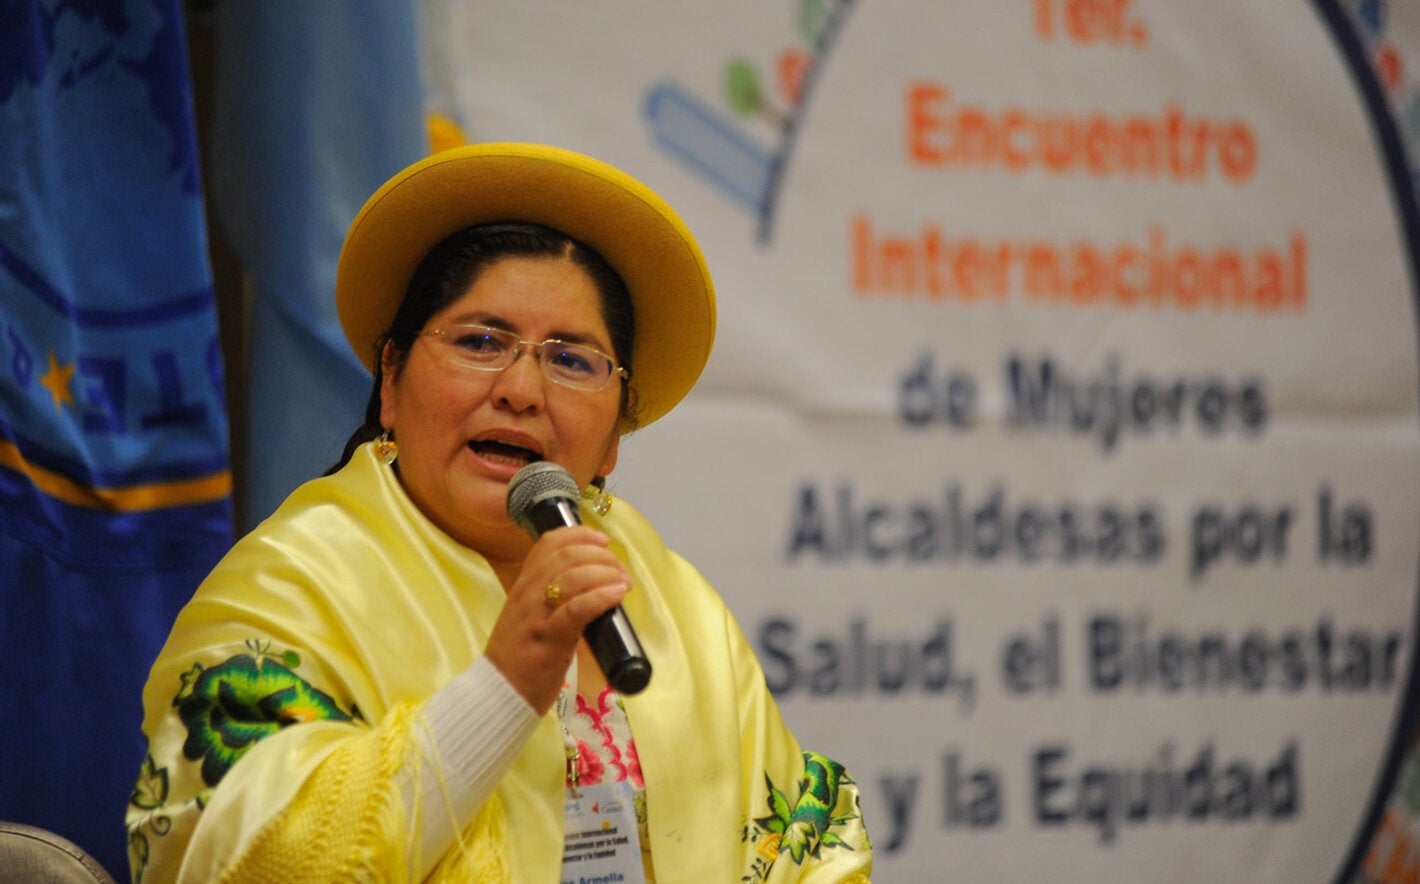 Mayor intervenes at Mayors meeting in Bolivia